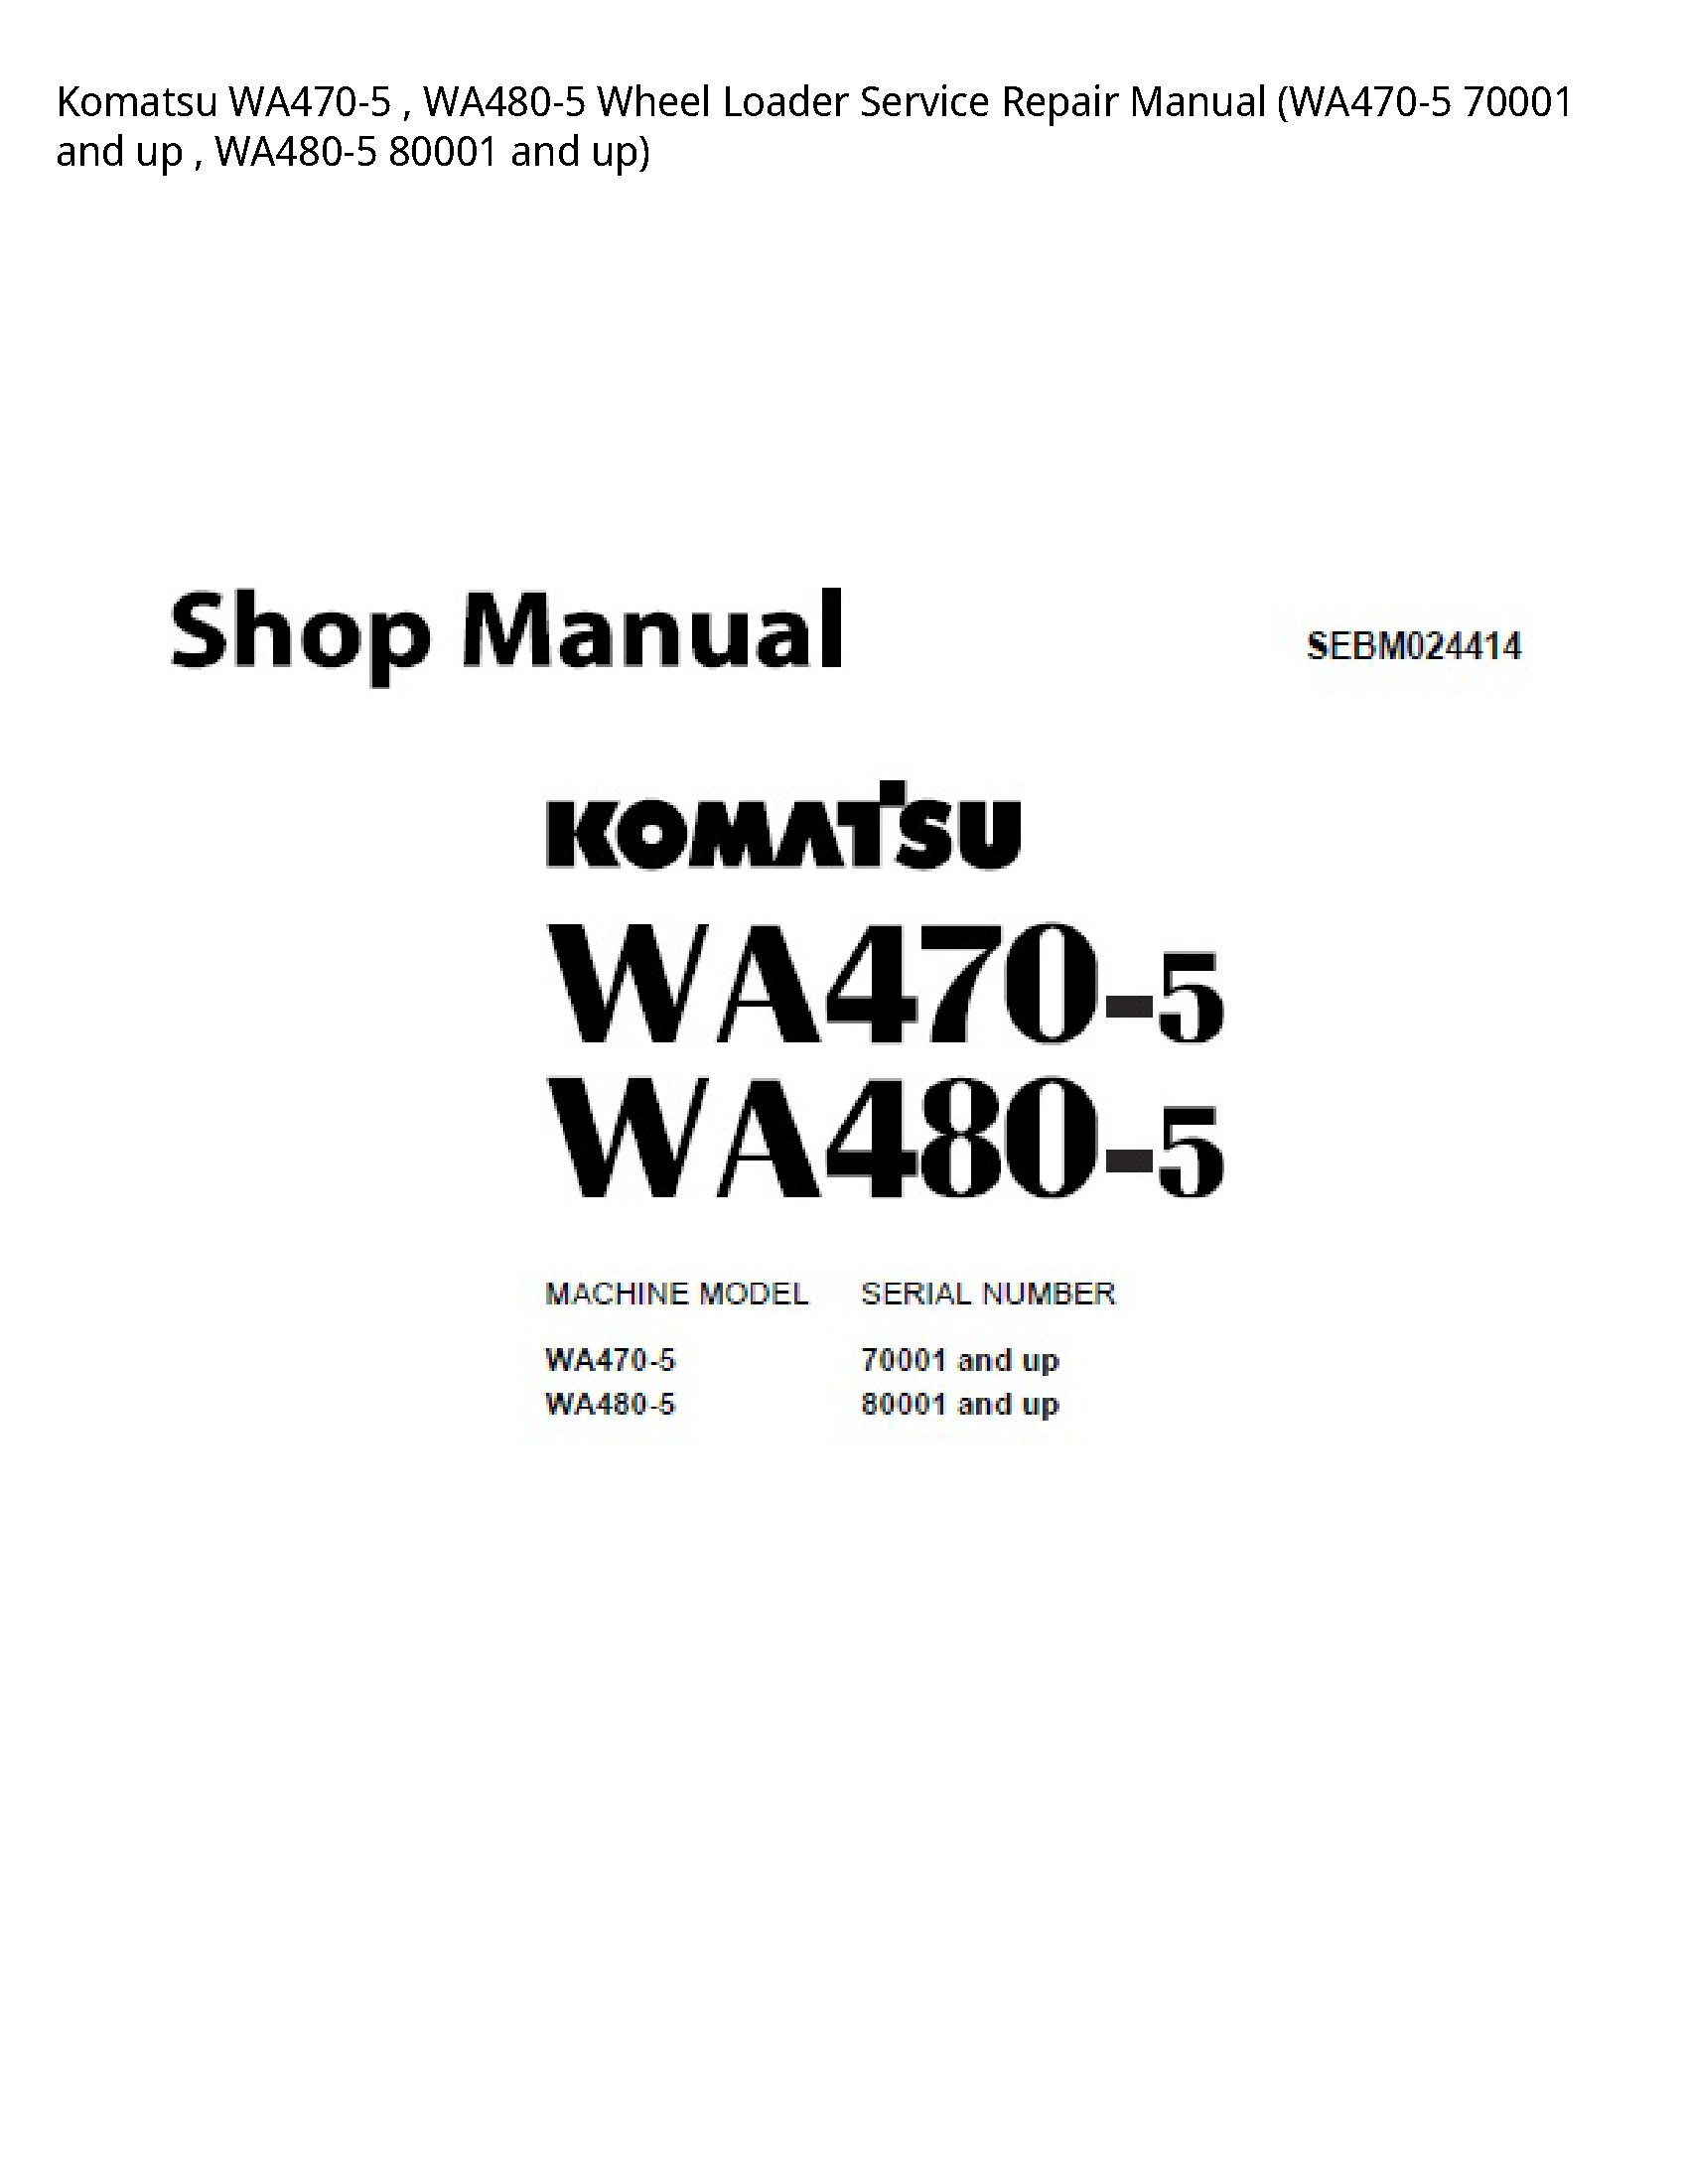 KOMATSU WA470-5 Wheel Loader manual